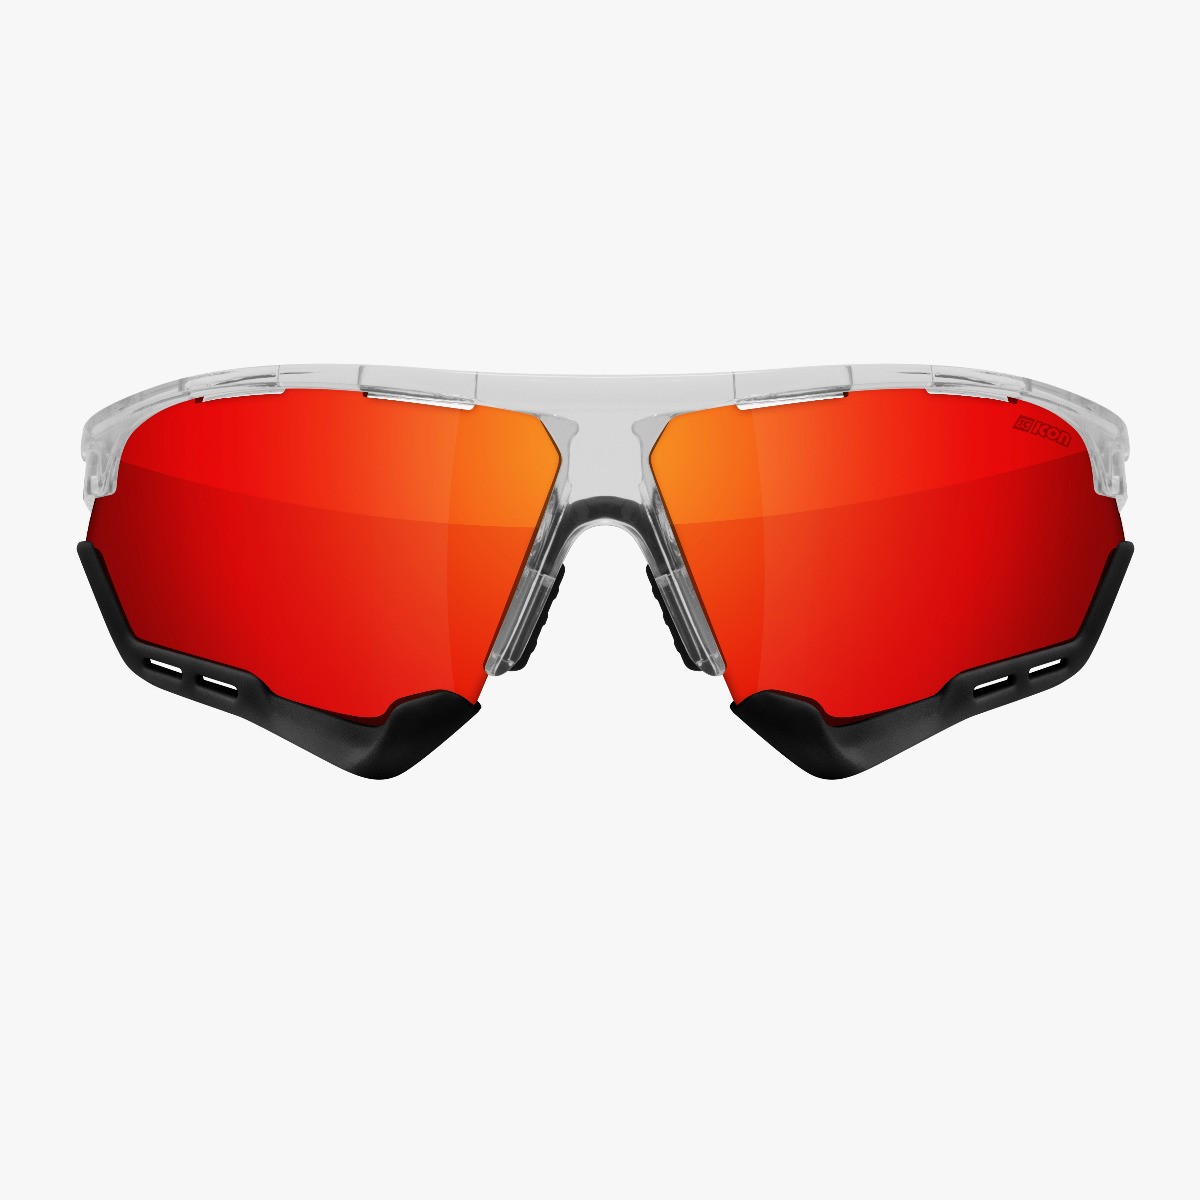 Aerocomfort performance sunglasses scnpp crystal frame red lenses EY19060703
